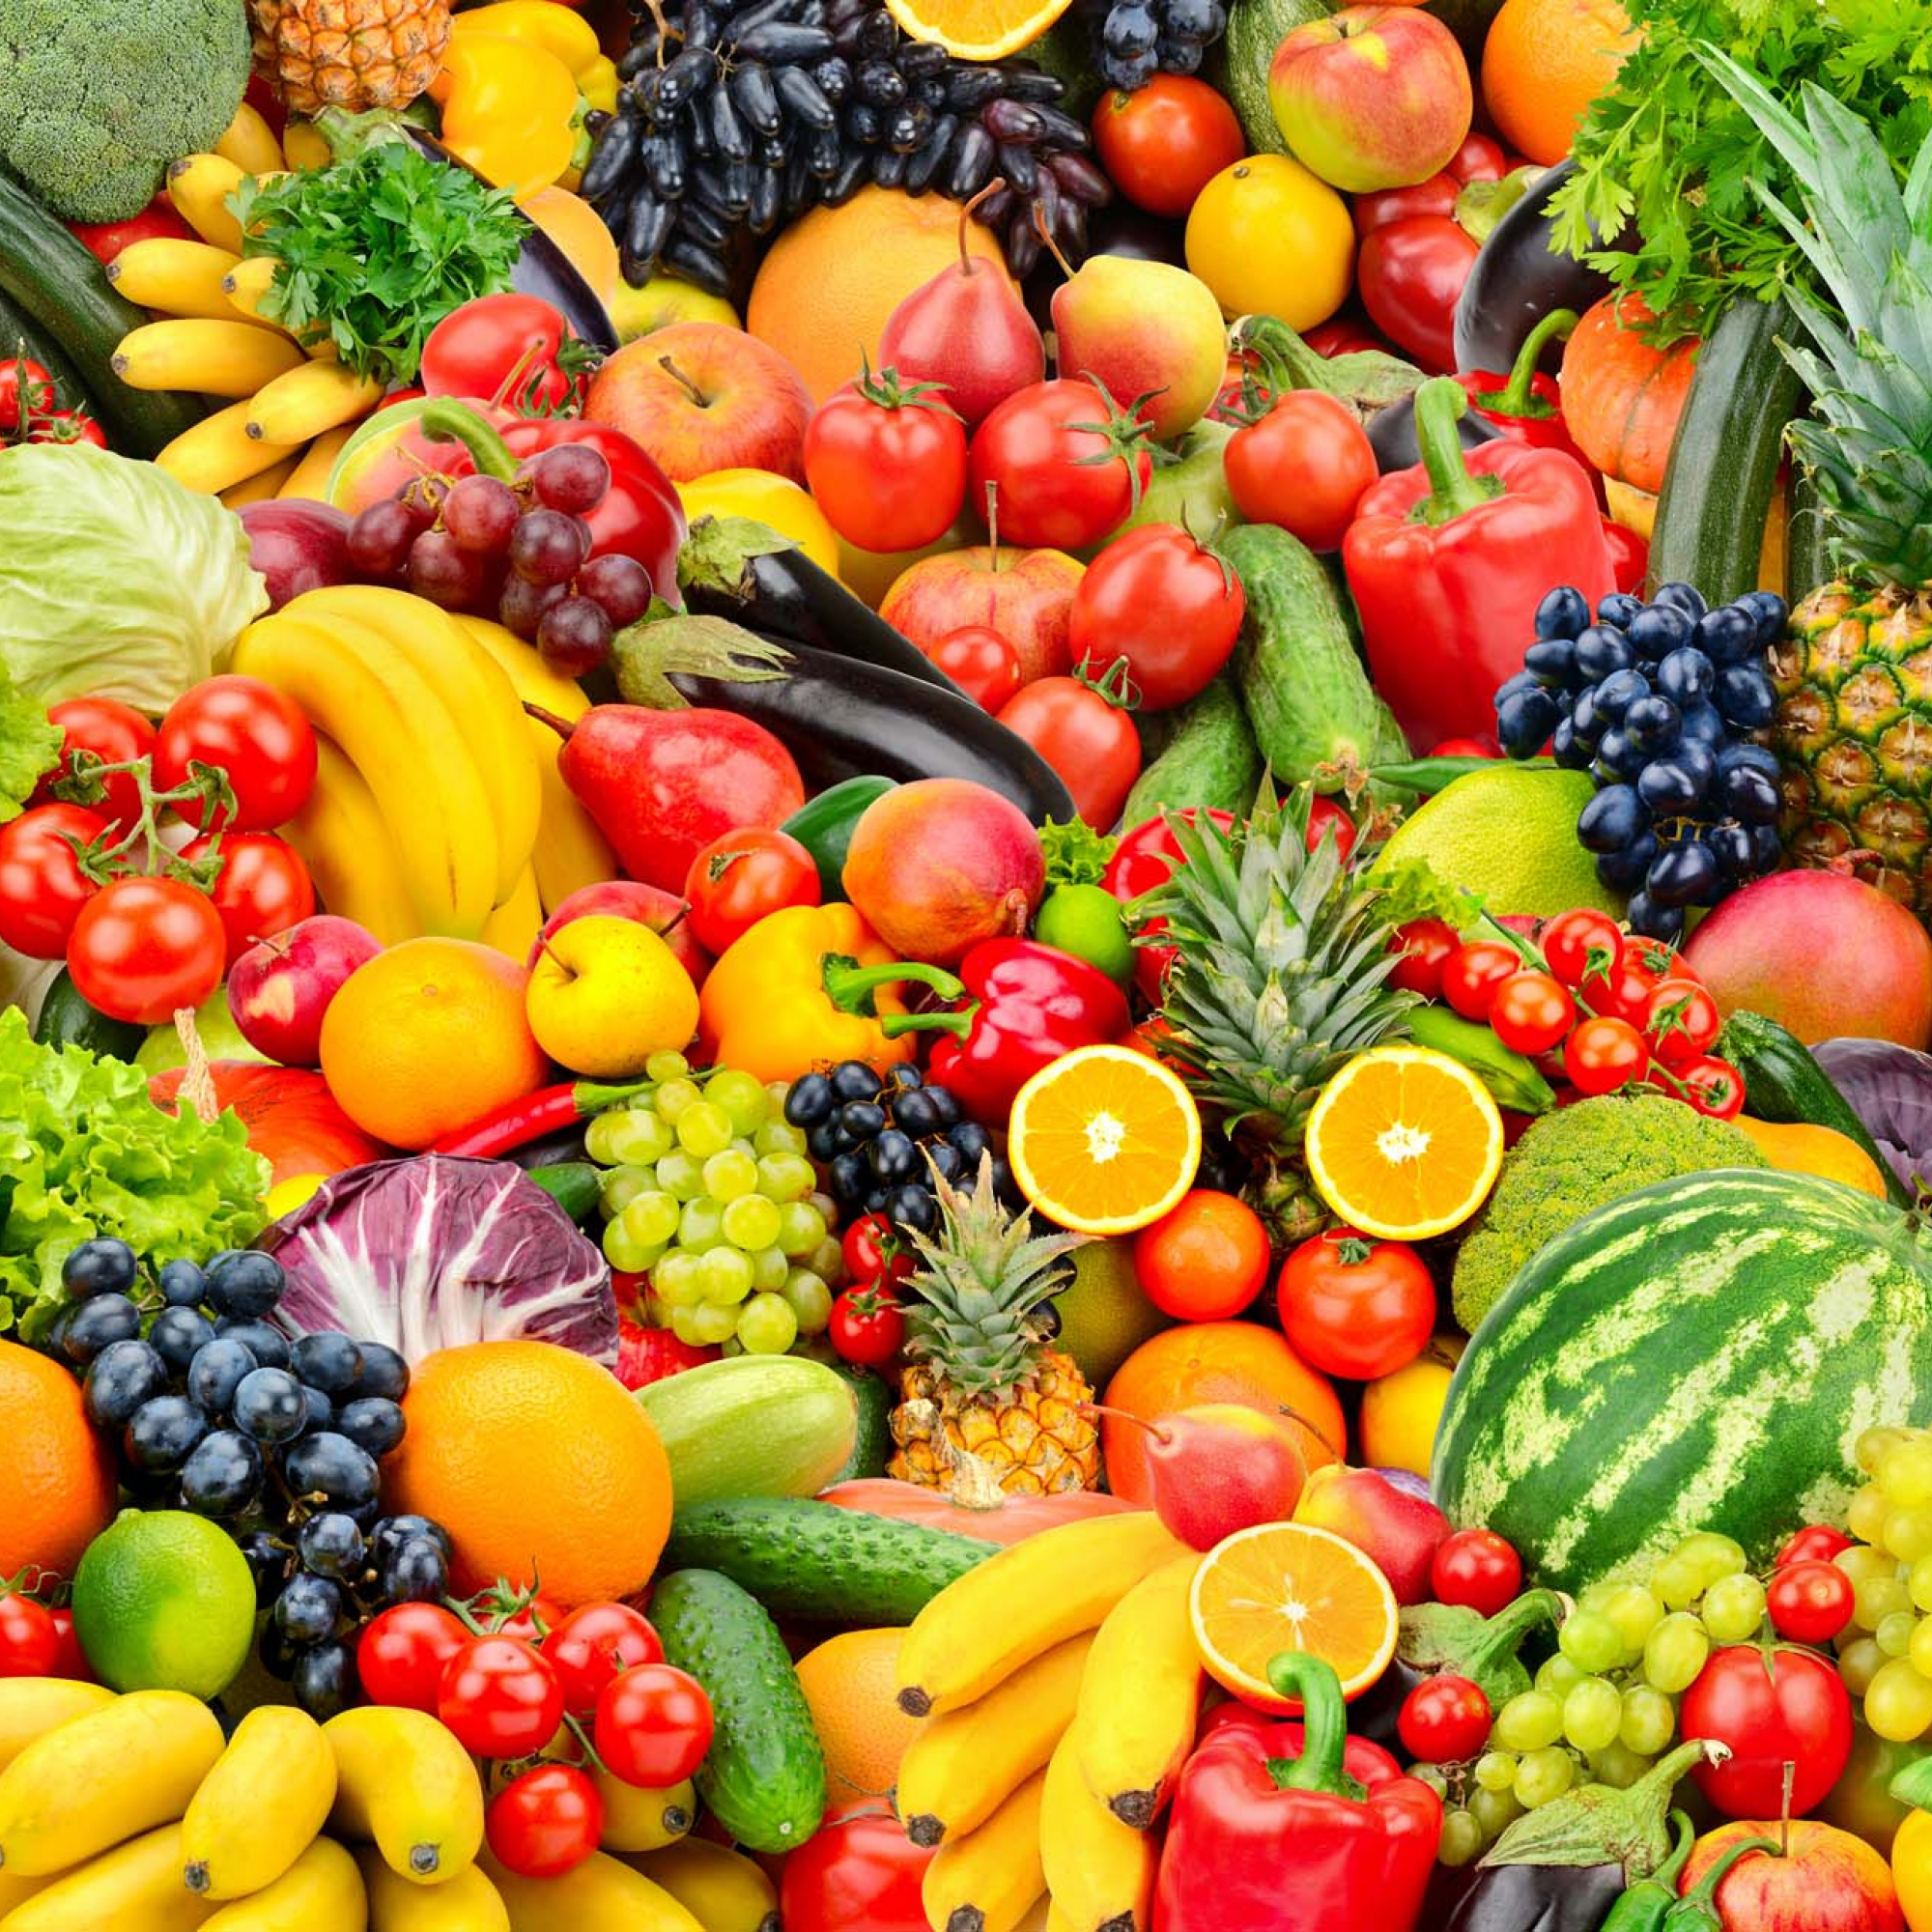 Фотообои :: Панно :: Еда и фрукты :: Фотообои еда и фрукты Roomnata, арт. 8-043